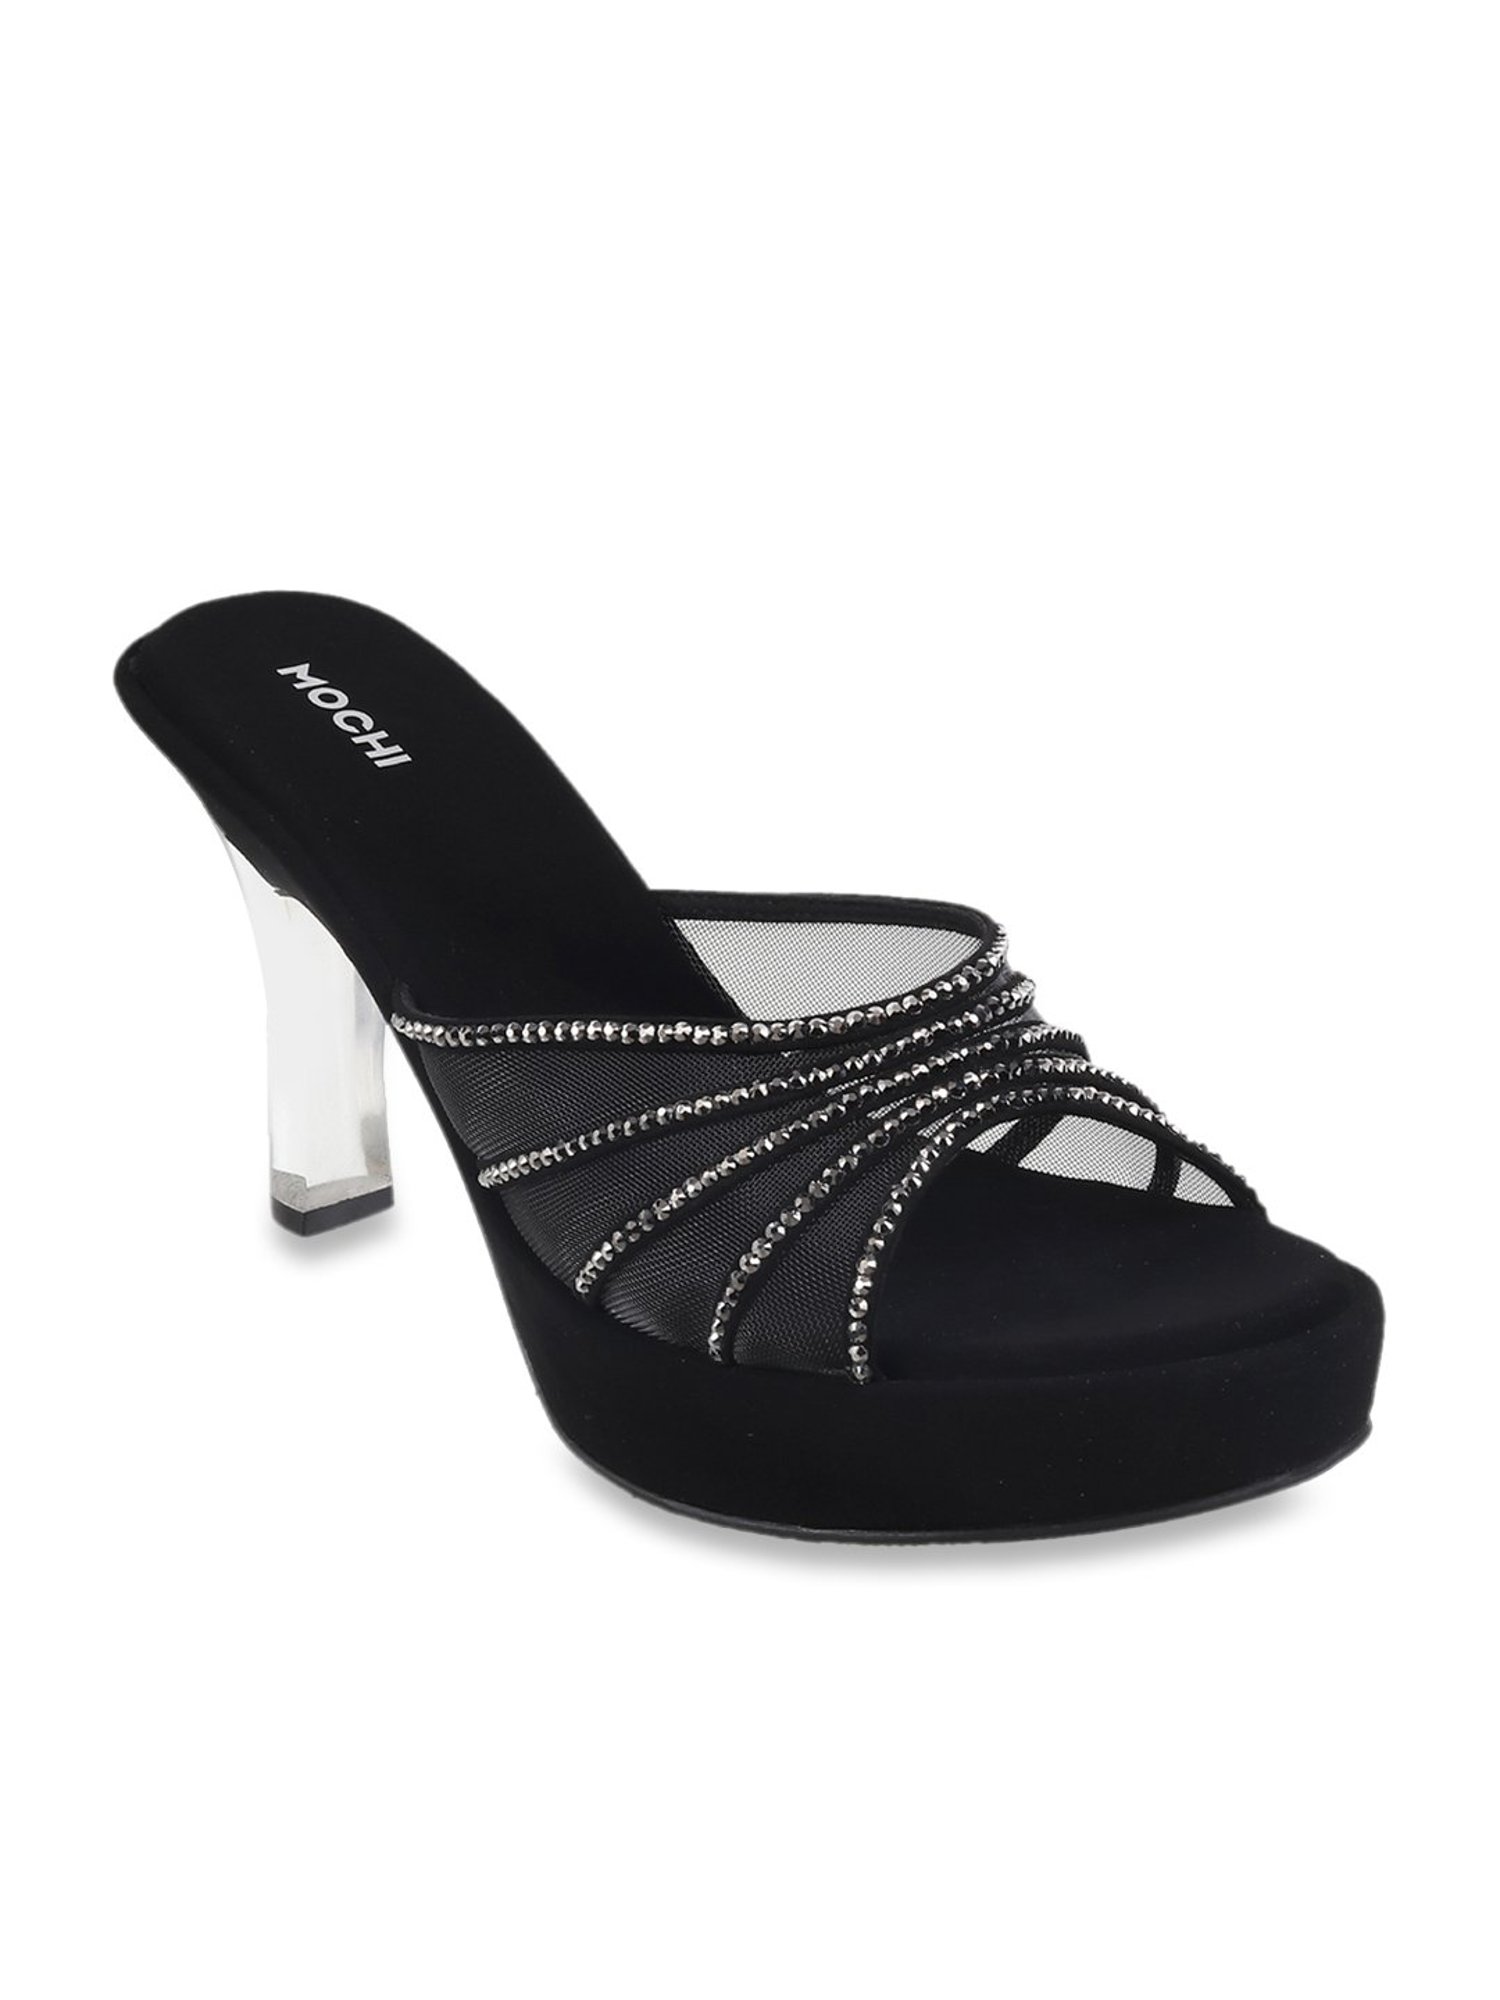 Buy Mochi Women Black Party Sandals Online | SKU: 40-2442-11-36 – Mochi  Shoes